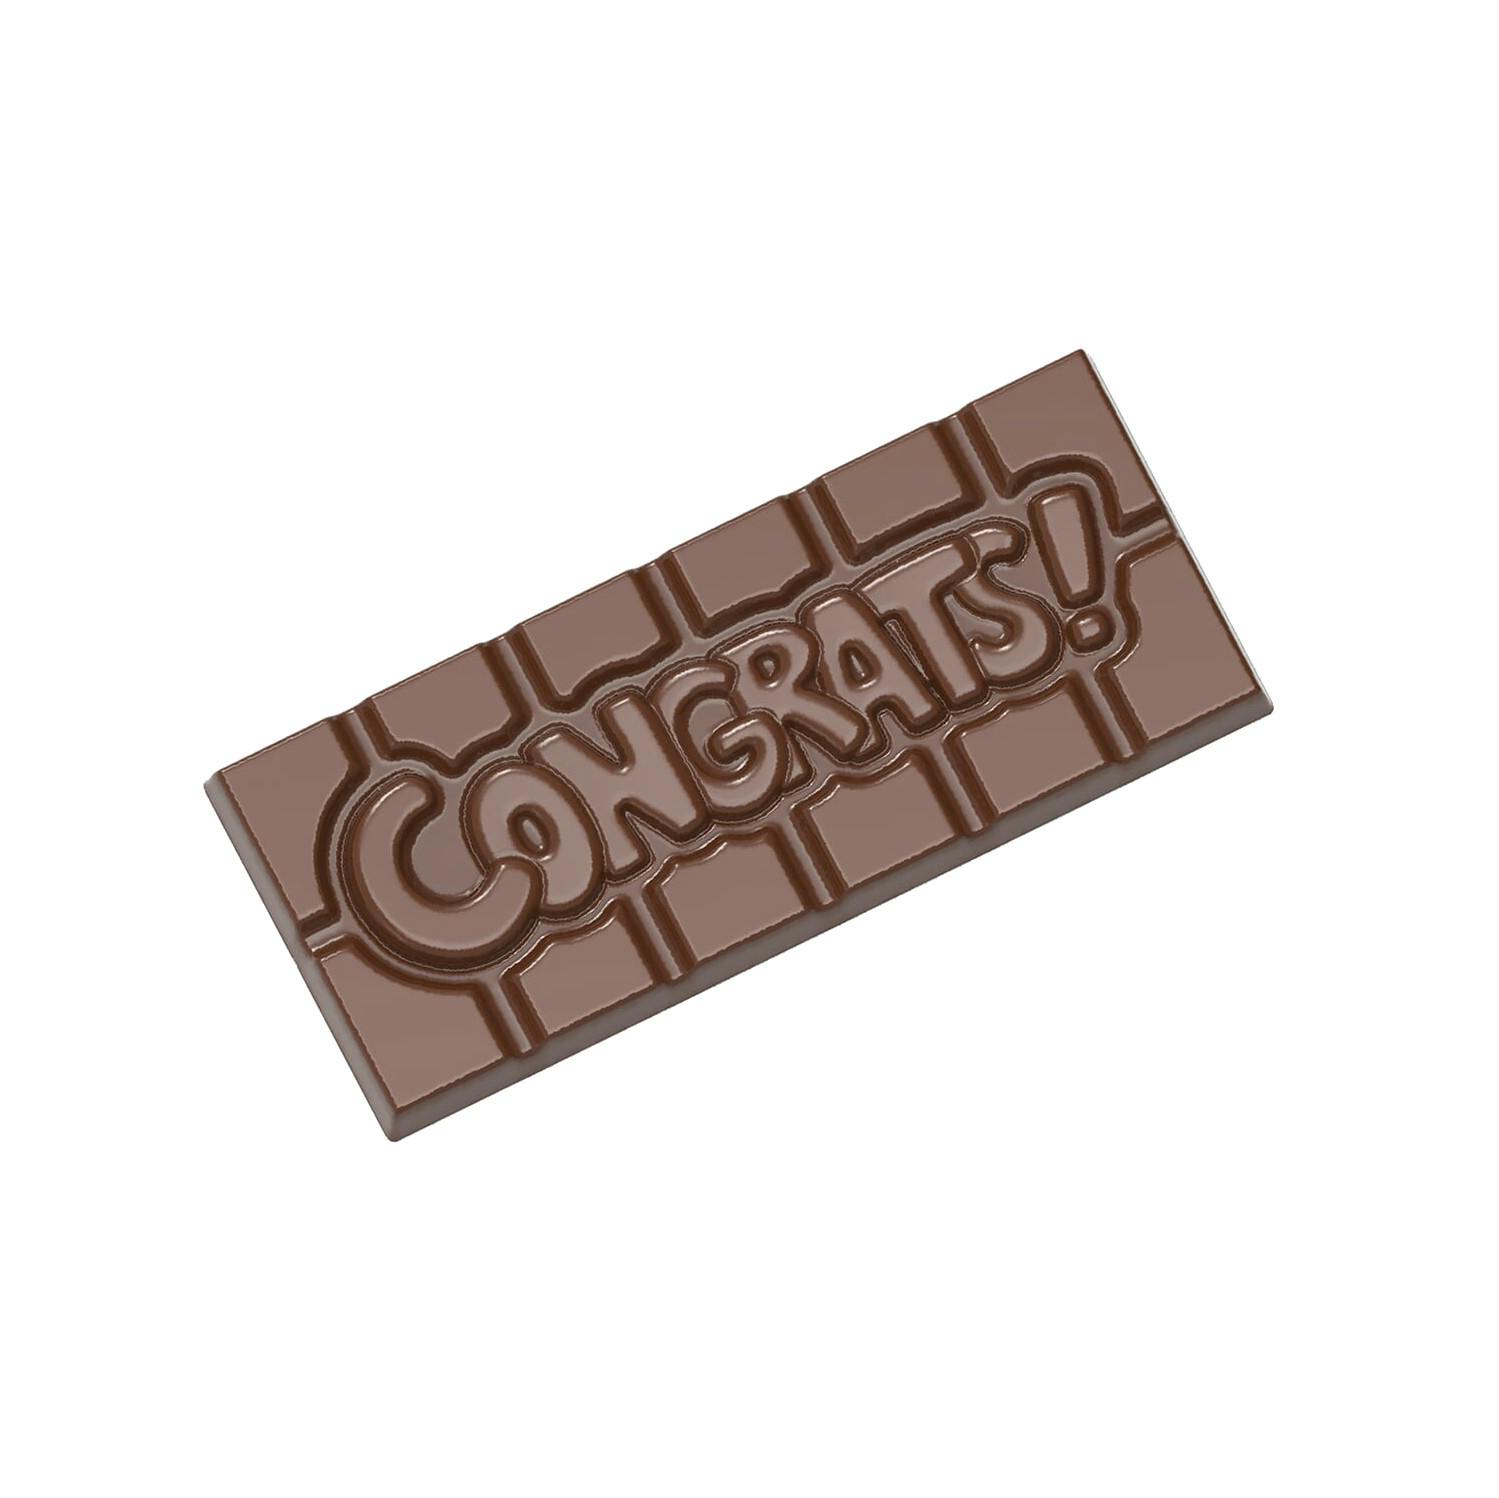 Wishes - 70% Mörk Choklad - Congrats 40g (x 32st)